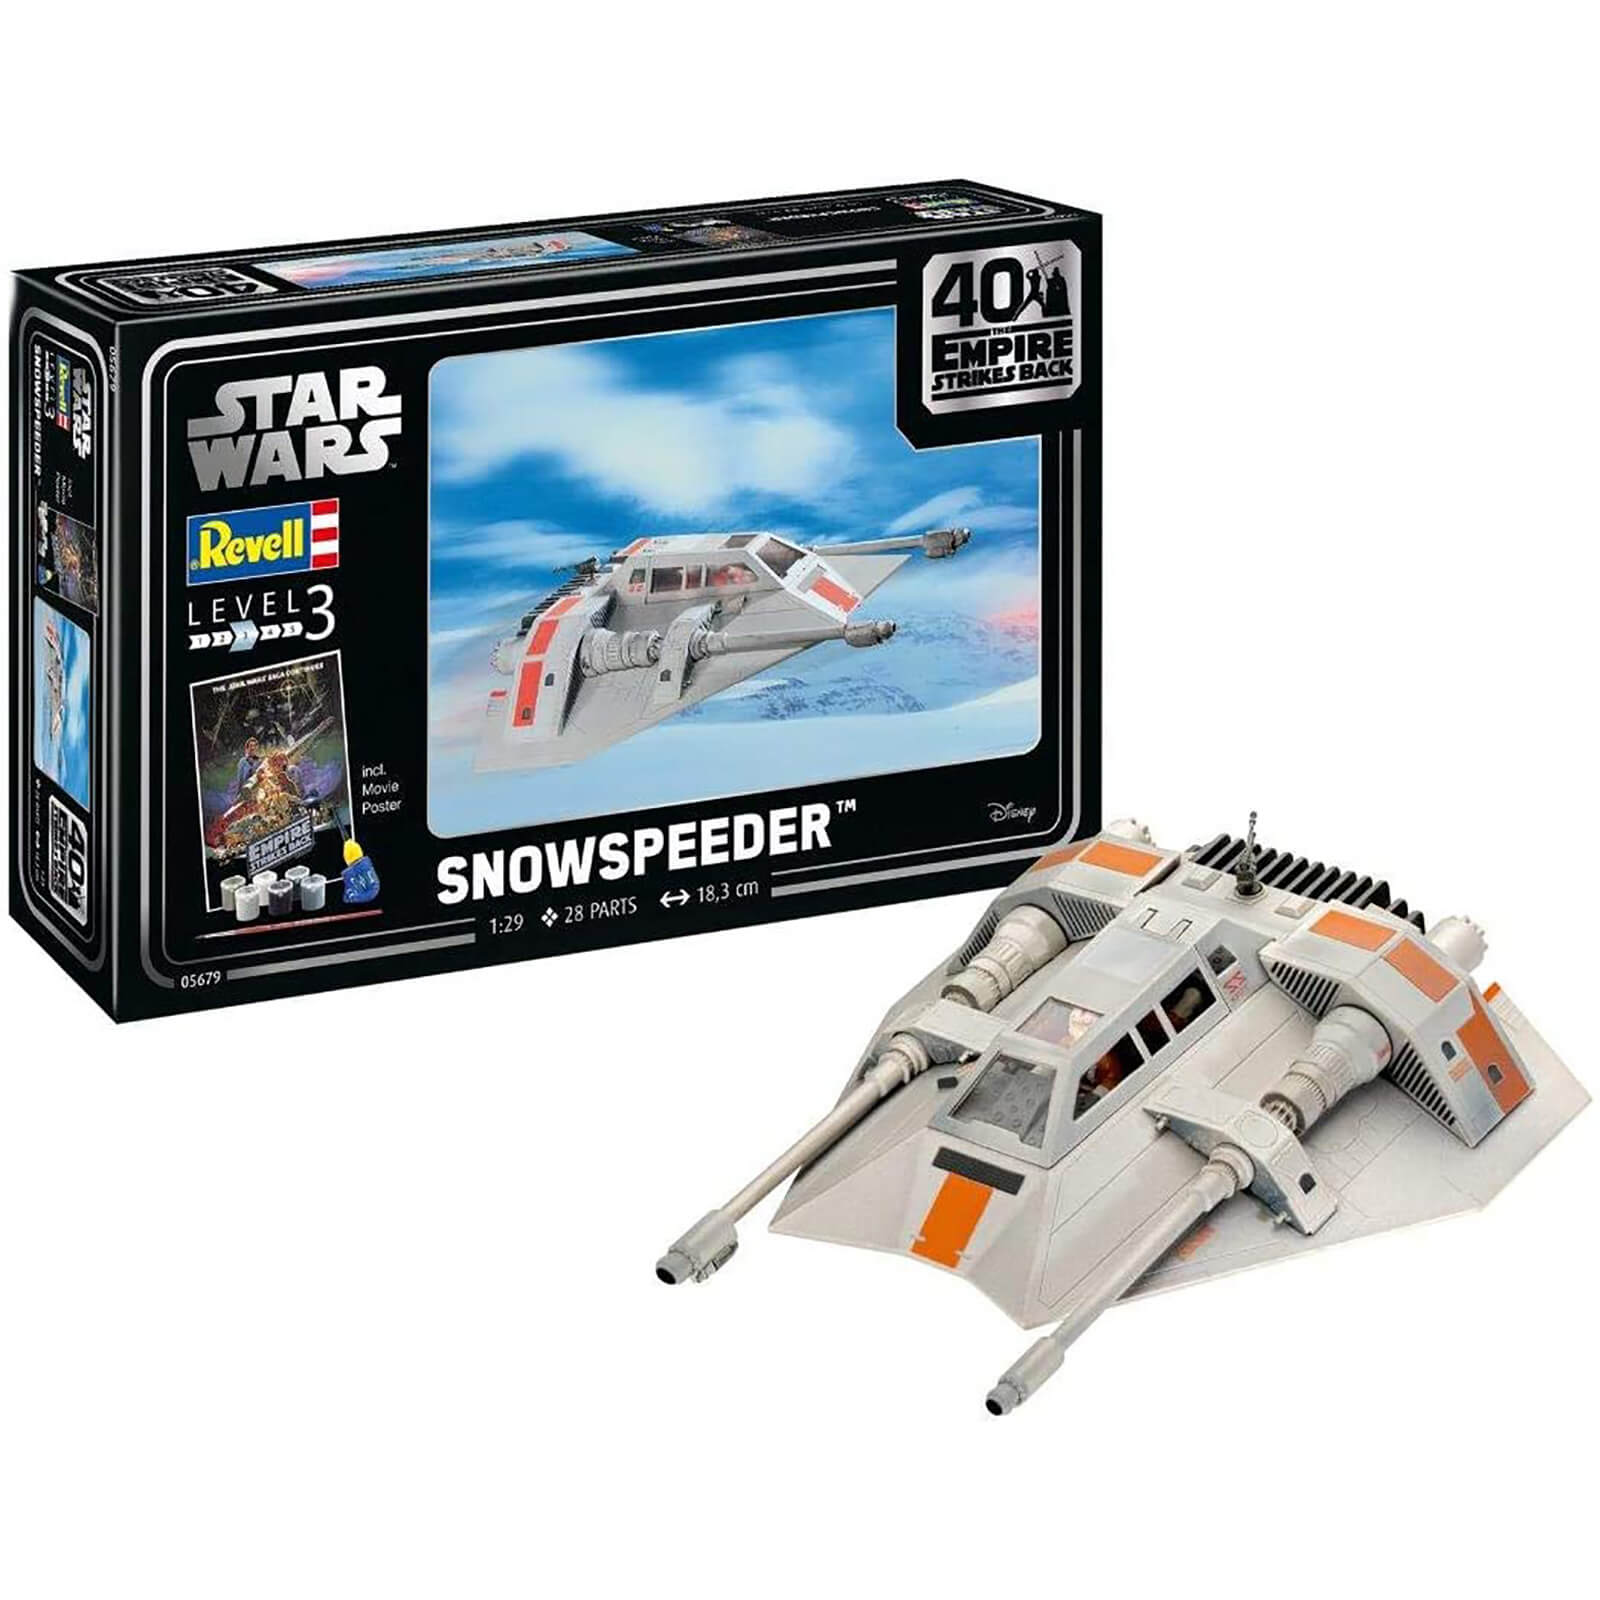 Revell Gift Set - Snowspeeder (The Empire Strikes Back 40th Anniversary) Model (Scale 1:29)